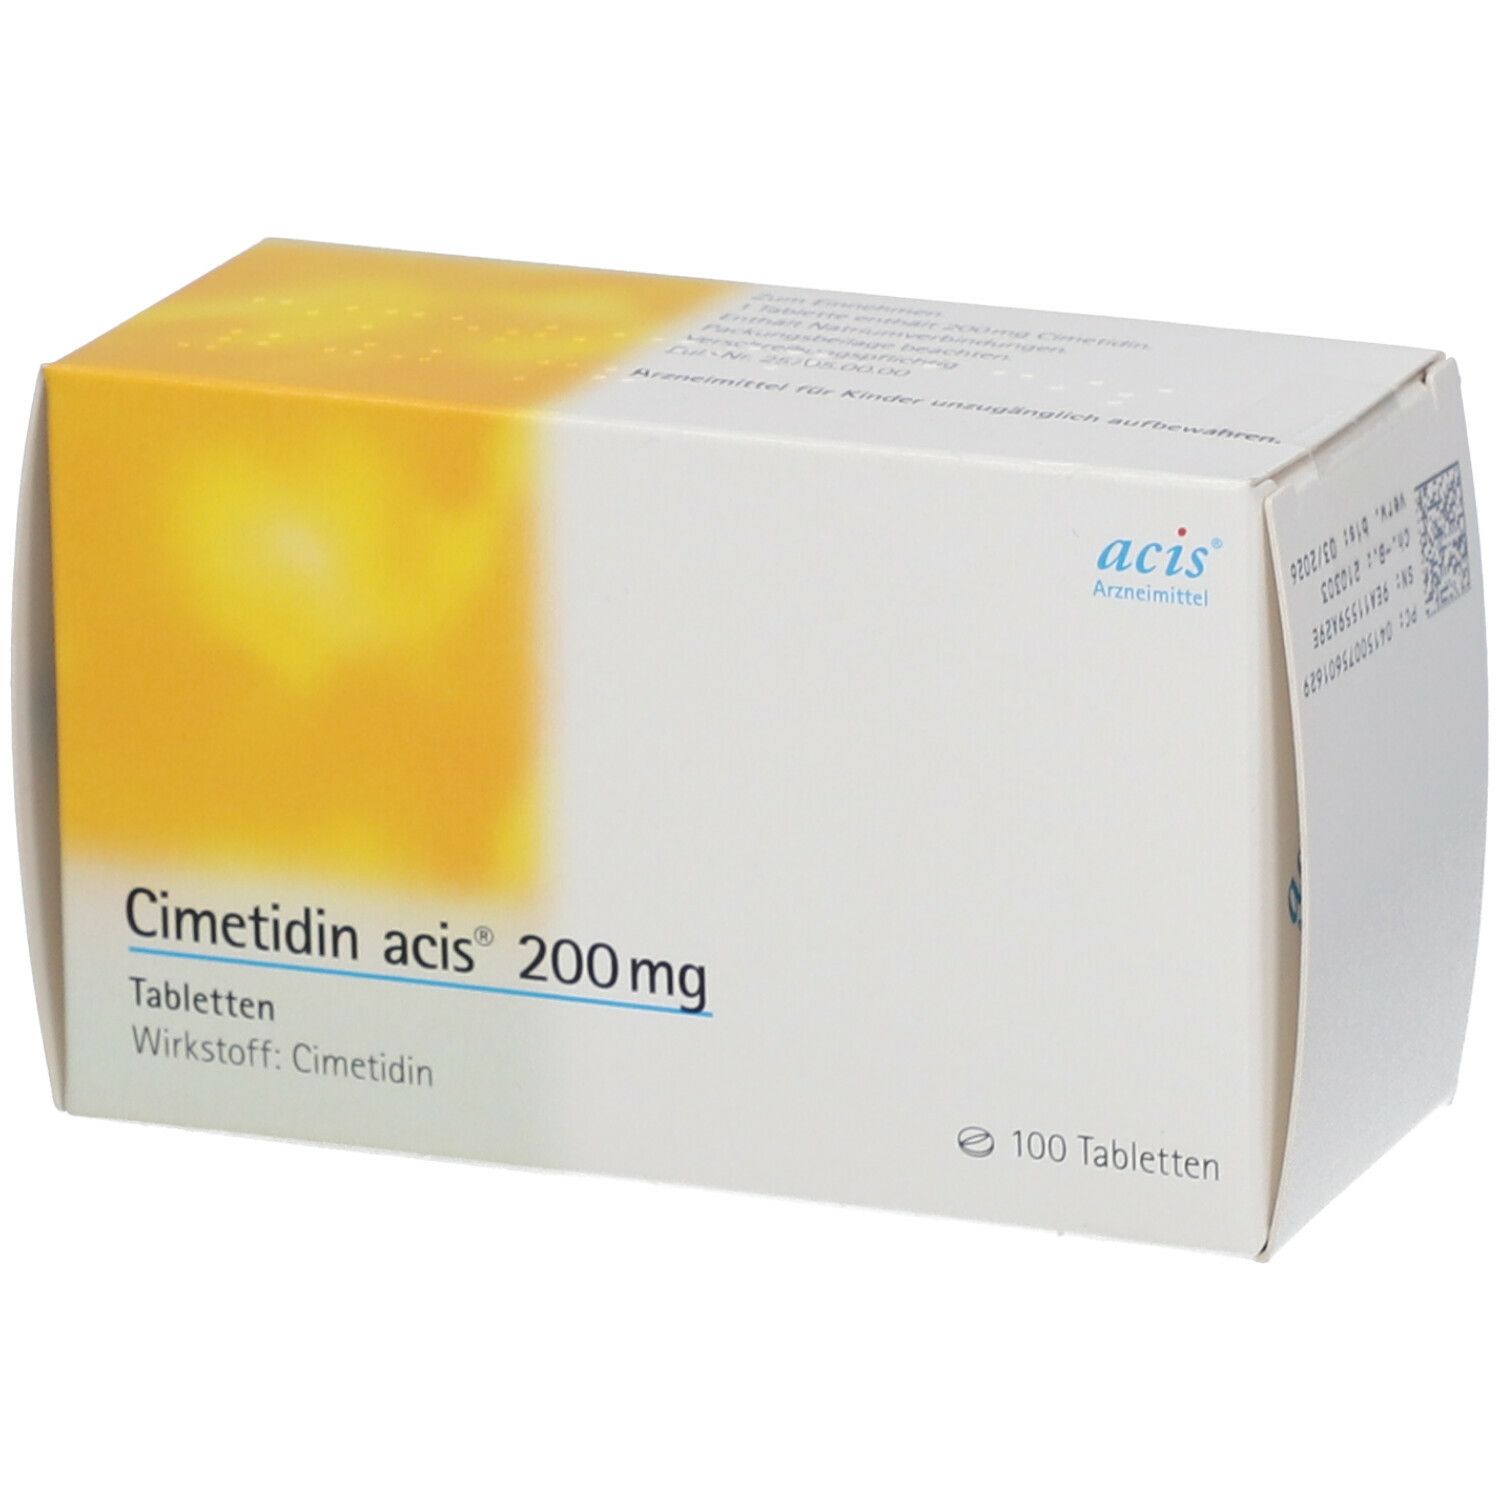 Cimetidin acis® 200 mg